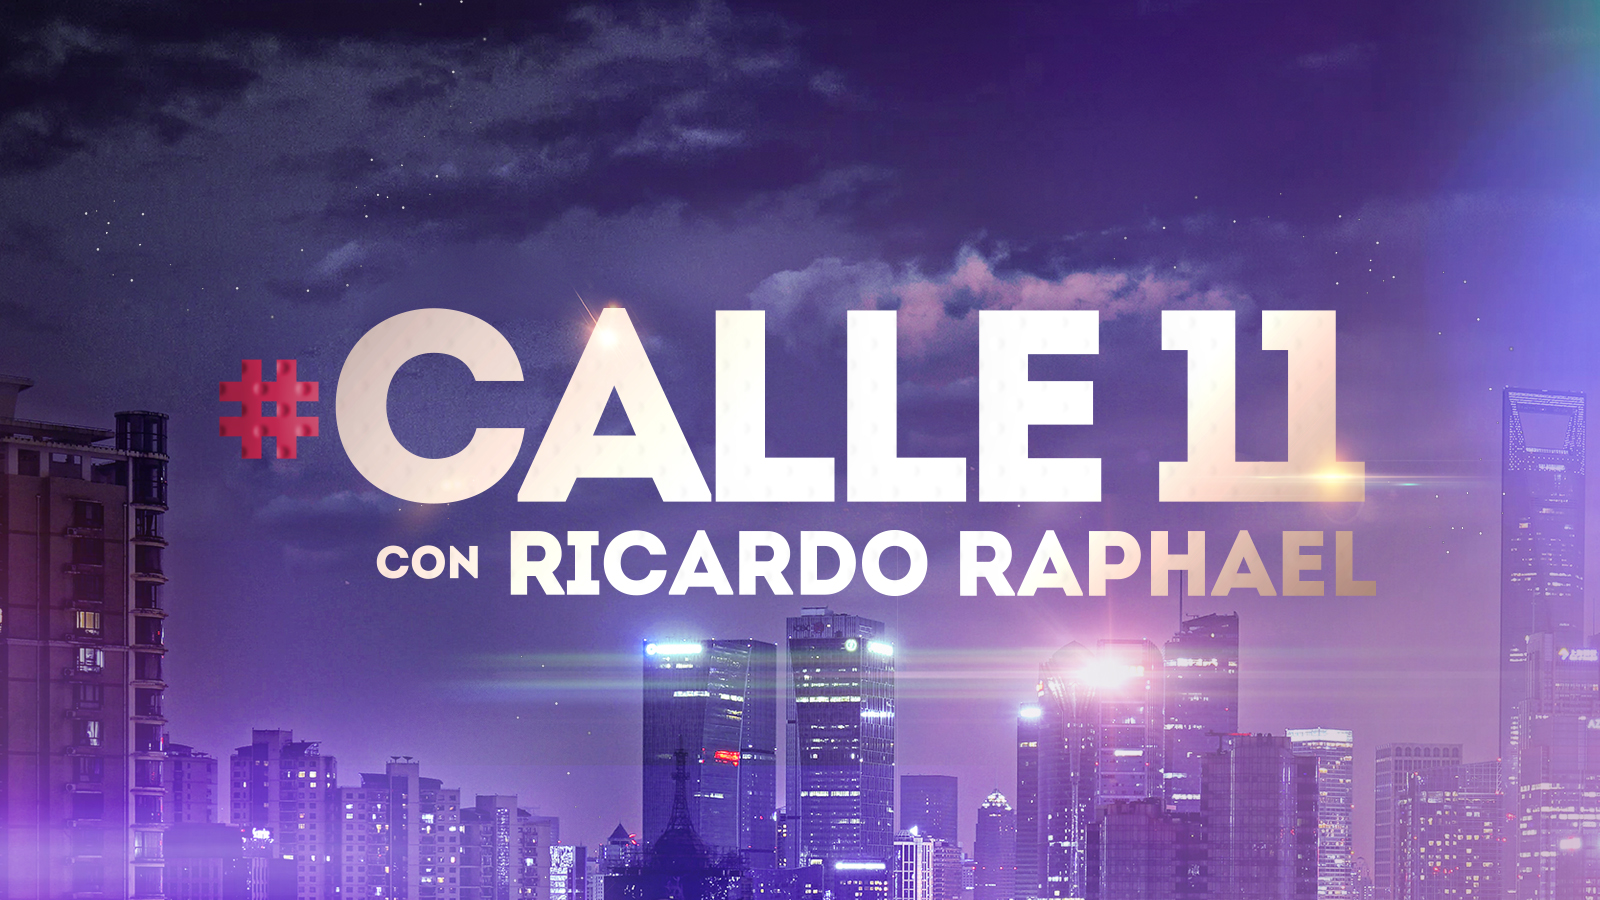 #Calle 11